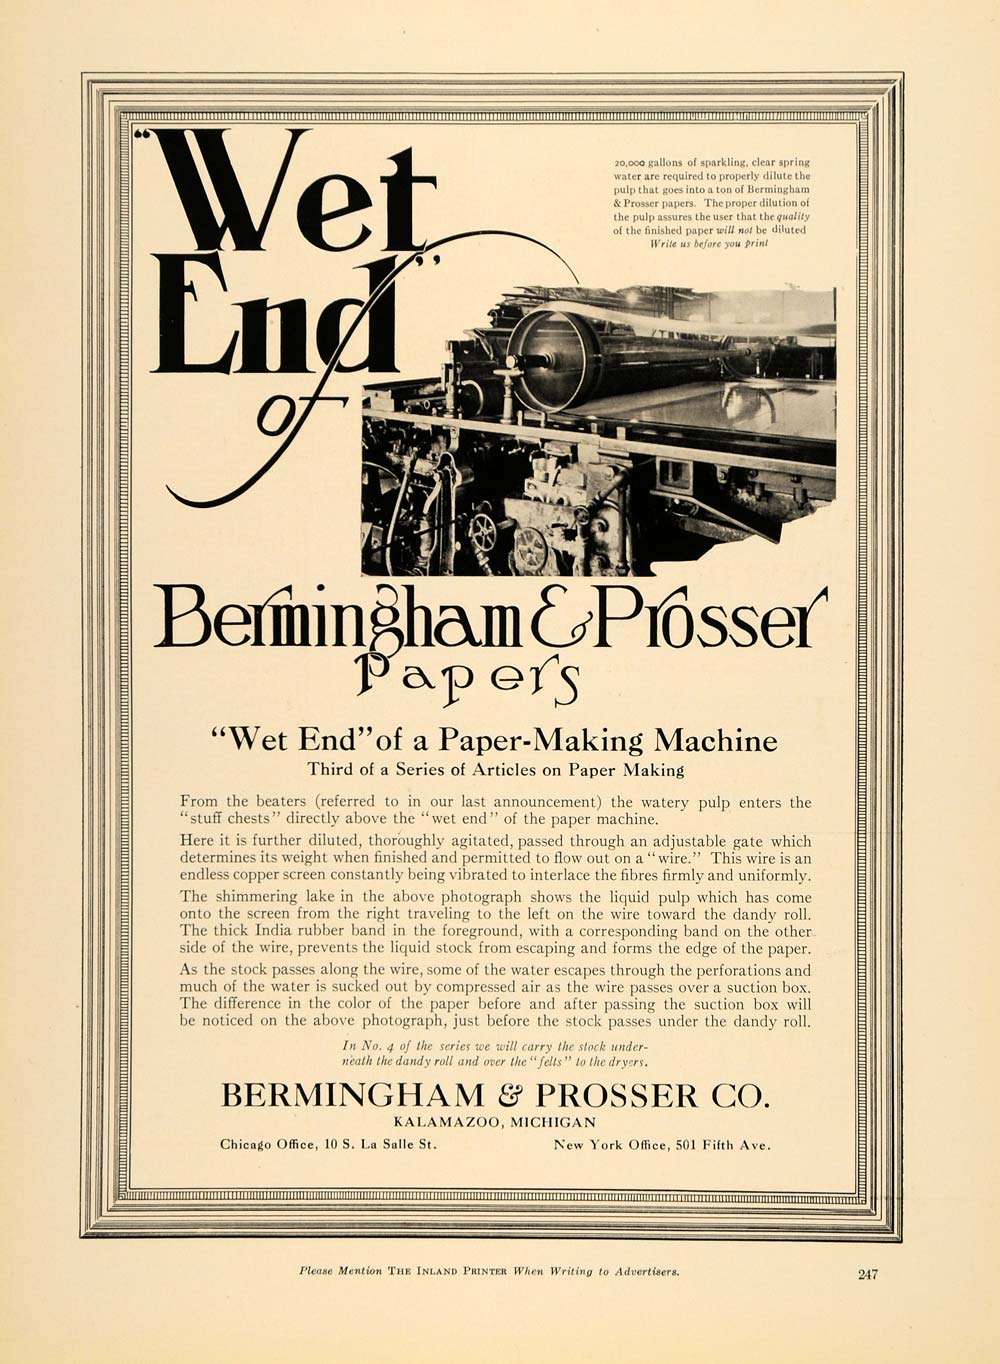 1920 Ad Bermingham & Prosser Co. Papers Machinery - ORIGINAL ADVERTISING IPR1